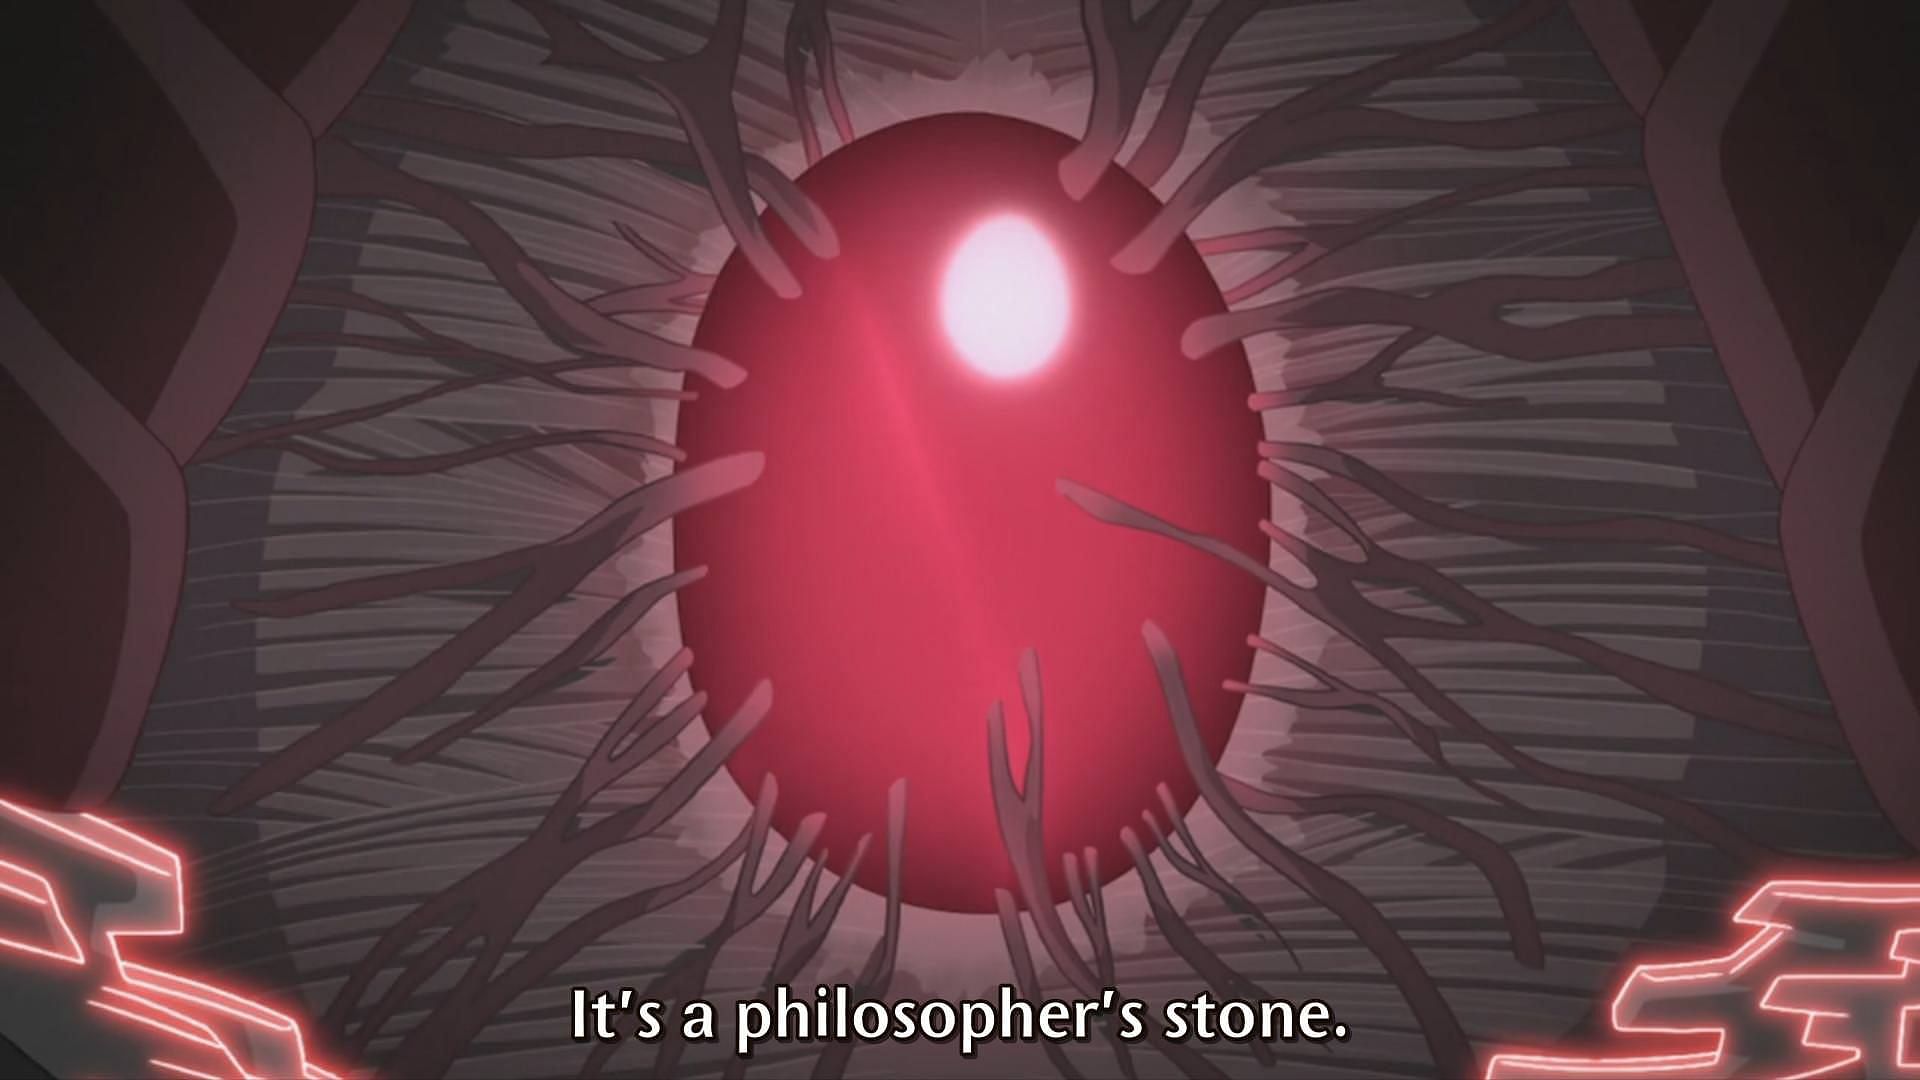 A Philosopher&#039;s Stone as seen in the Fullmetal Alchemist anime (Image Credits: Hiromu Arakawa/Square Enix, Viz Media, Fullmetal Alchemist)